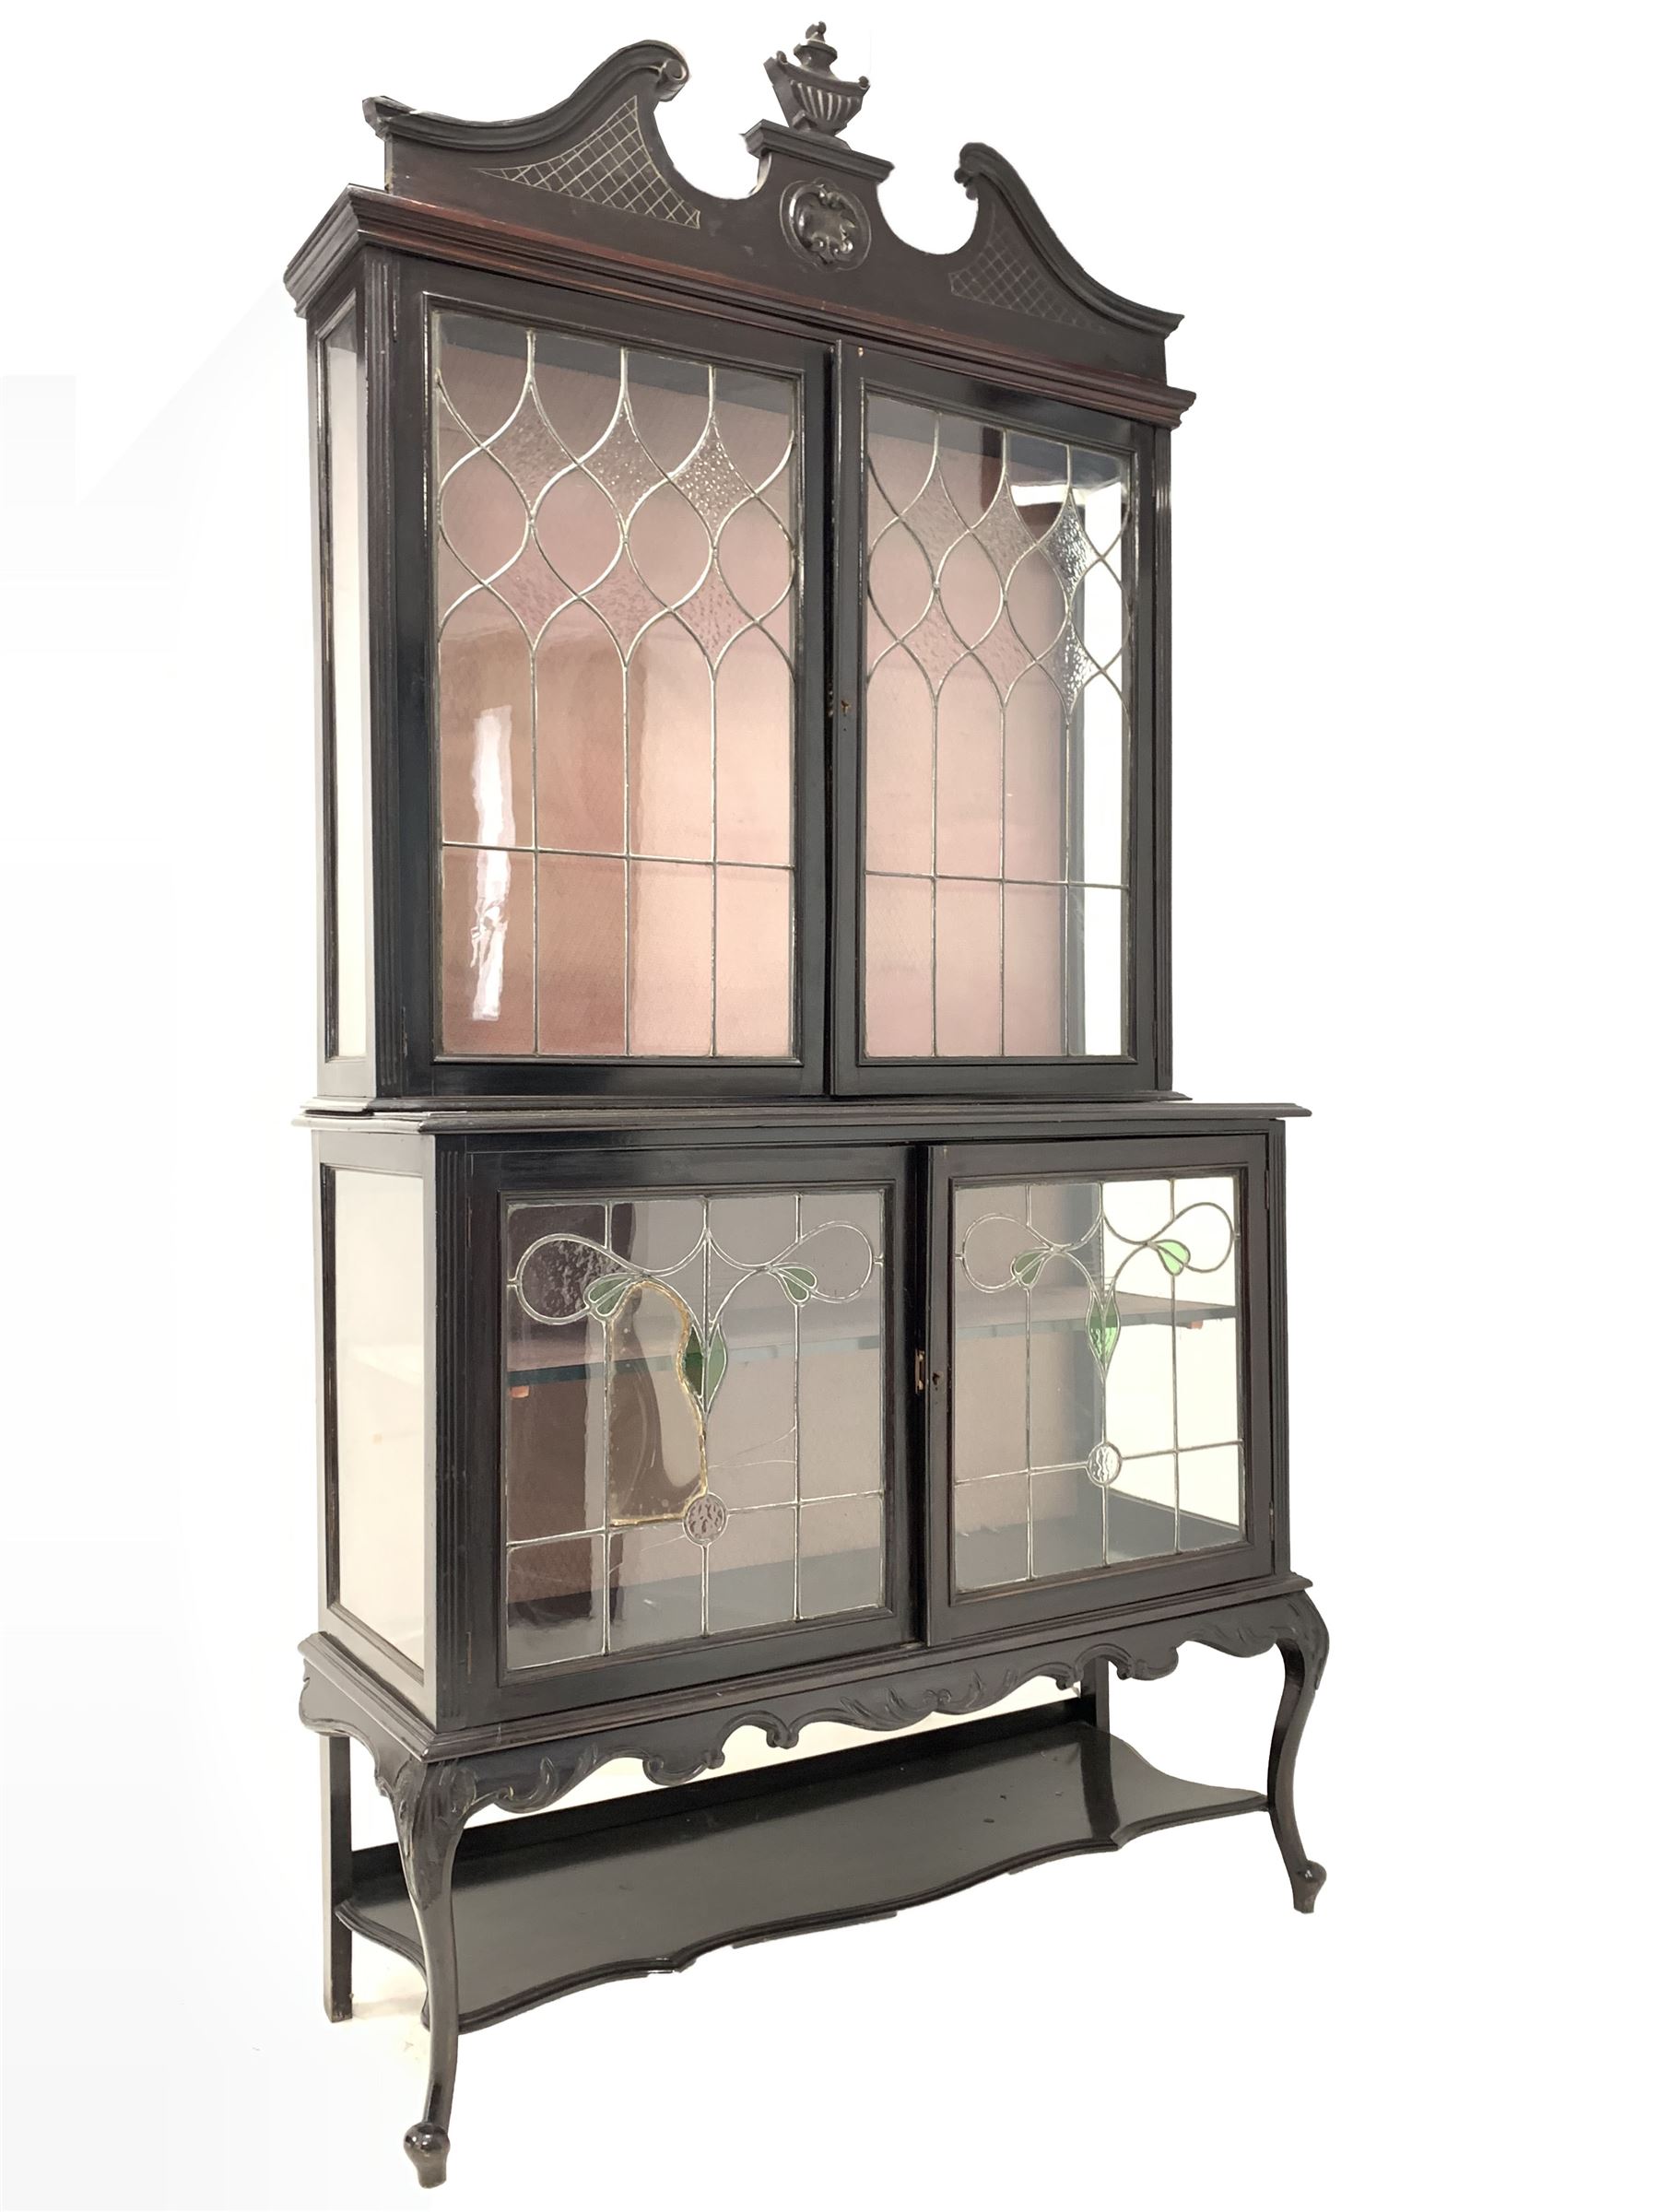 Late 19th century mahogany Empire style display cabinet